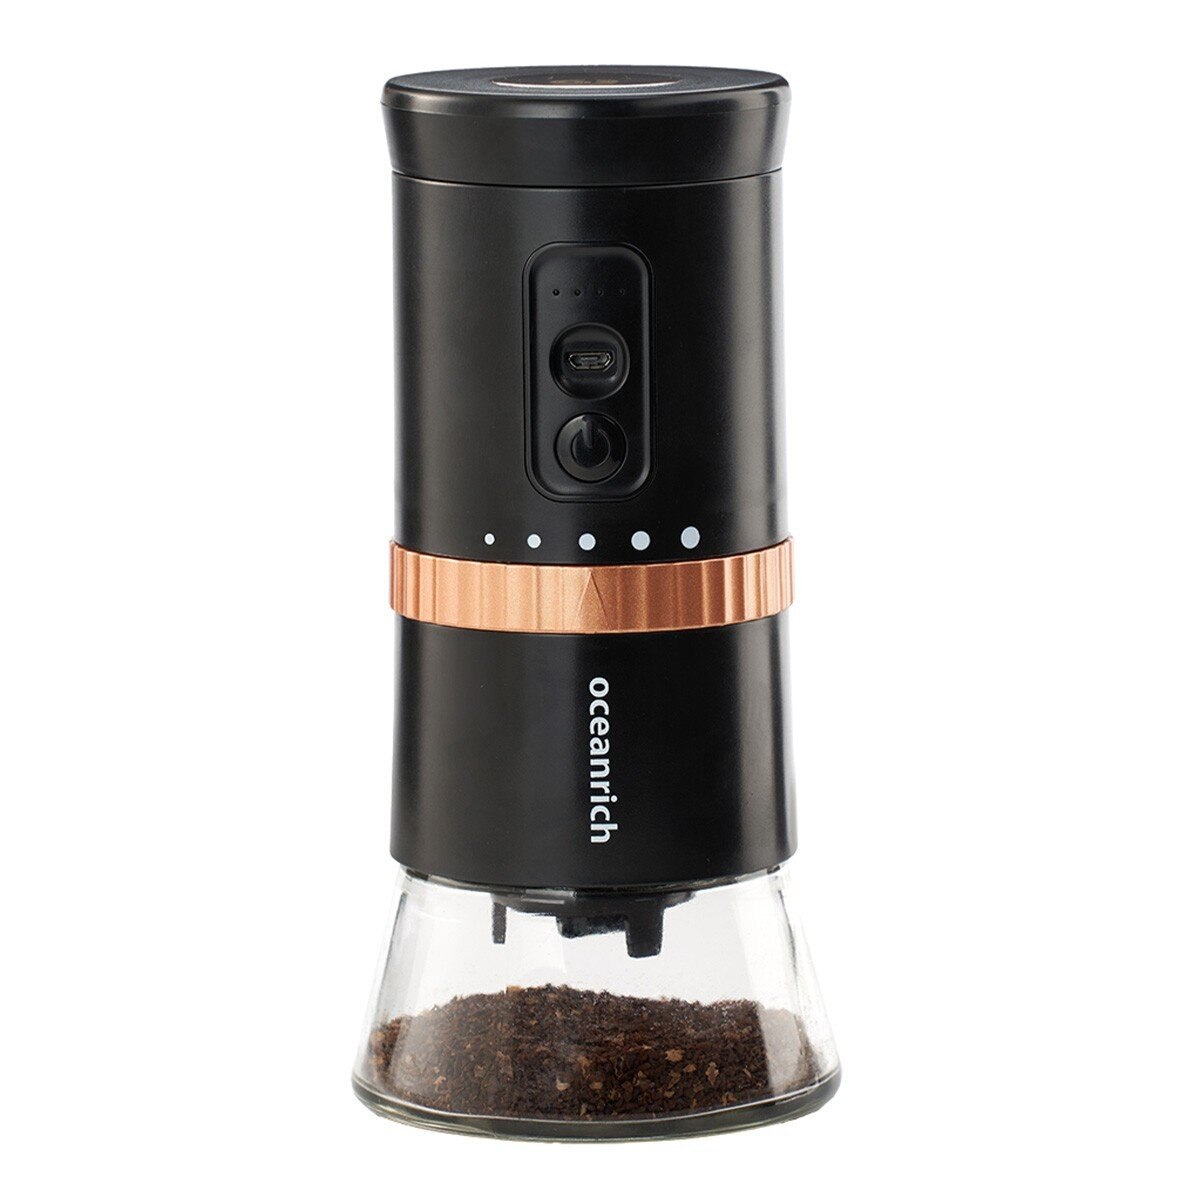 Oceanrich 歐新力奇 G2 便攜式電動磨豆機+咖啡粉罐(含蓋) 黑